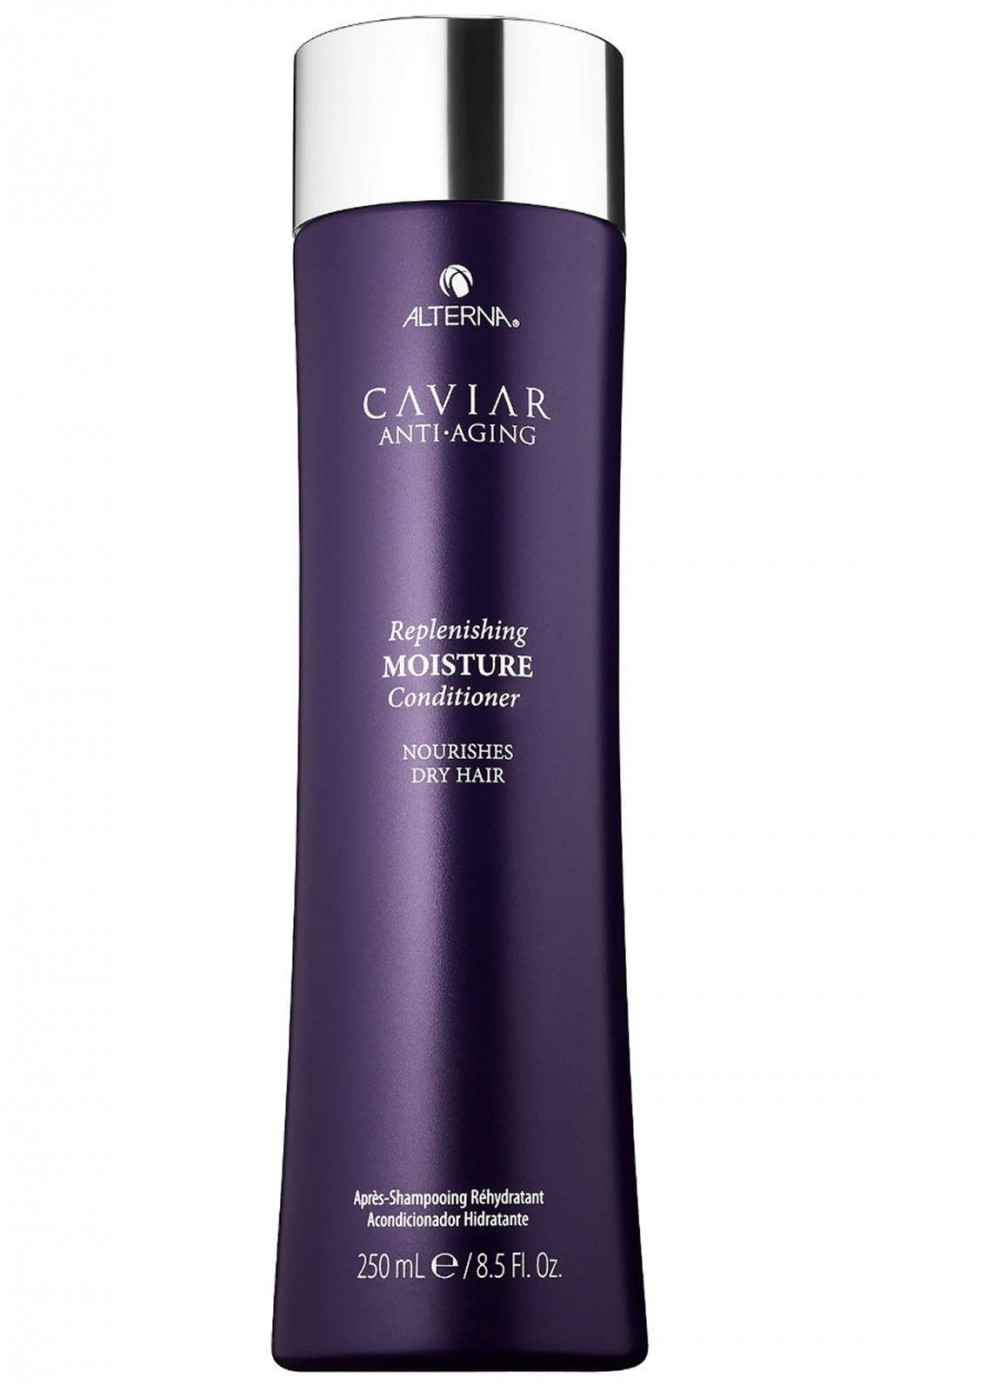 Caviar Anti-Aging Replenishing Moisture Conditioner (8.5 oz)